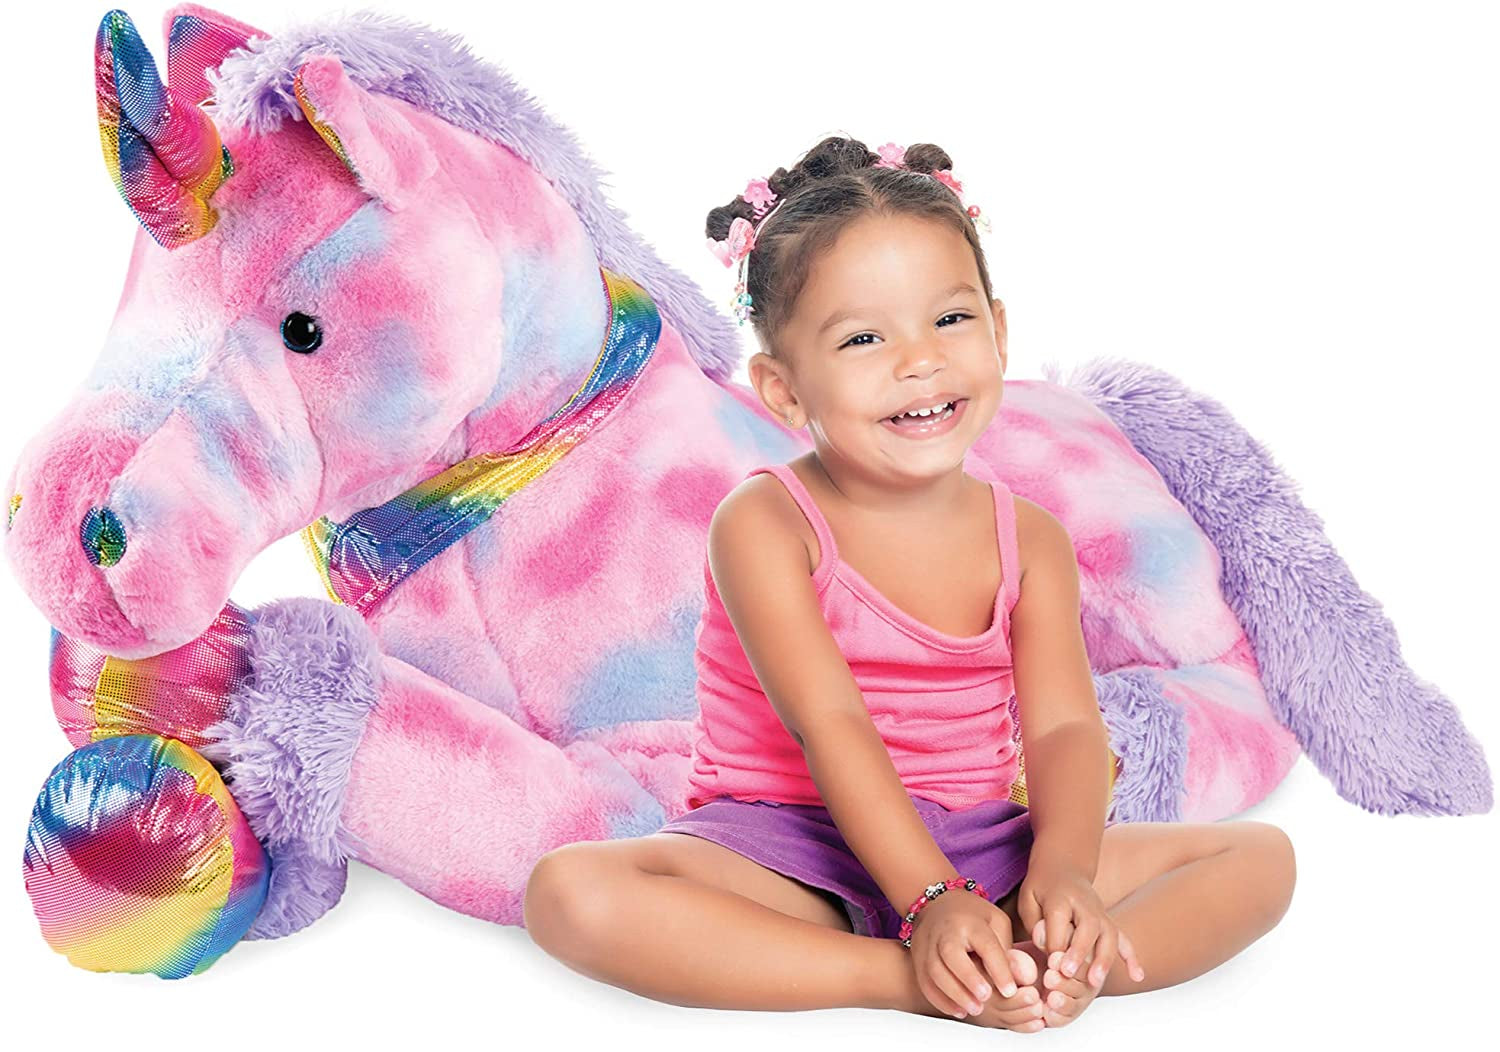 52In Kids Extra Large Plush Unicorn, Life-Size Stuffed Animal Toy W/Rainbow Details - Tie-Dye Faux Fur